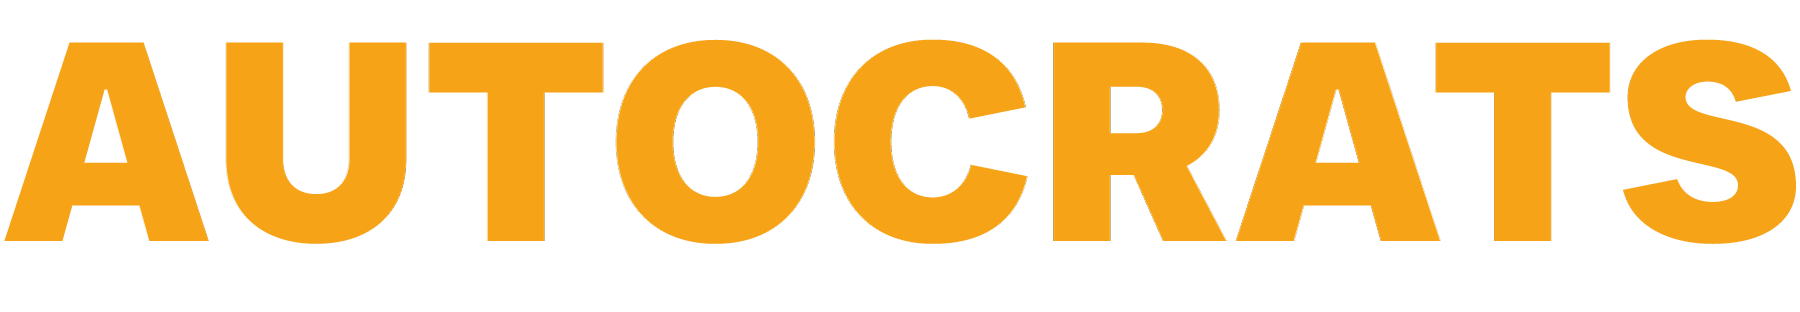 Autocrats Text Logo